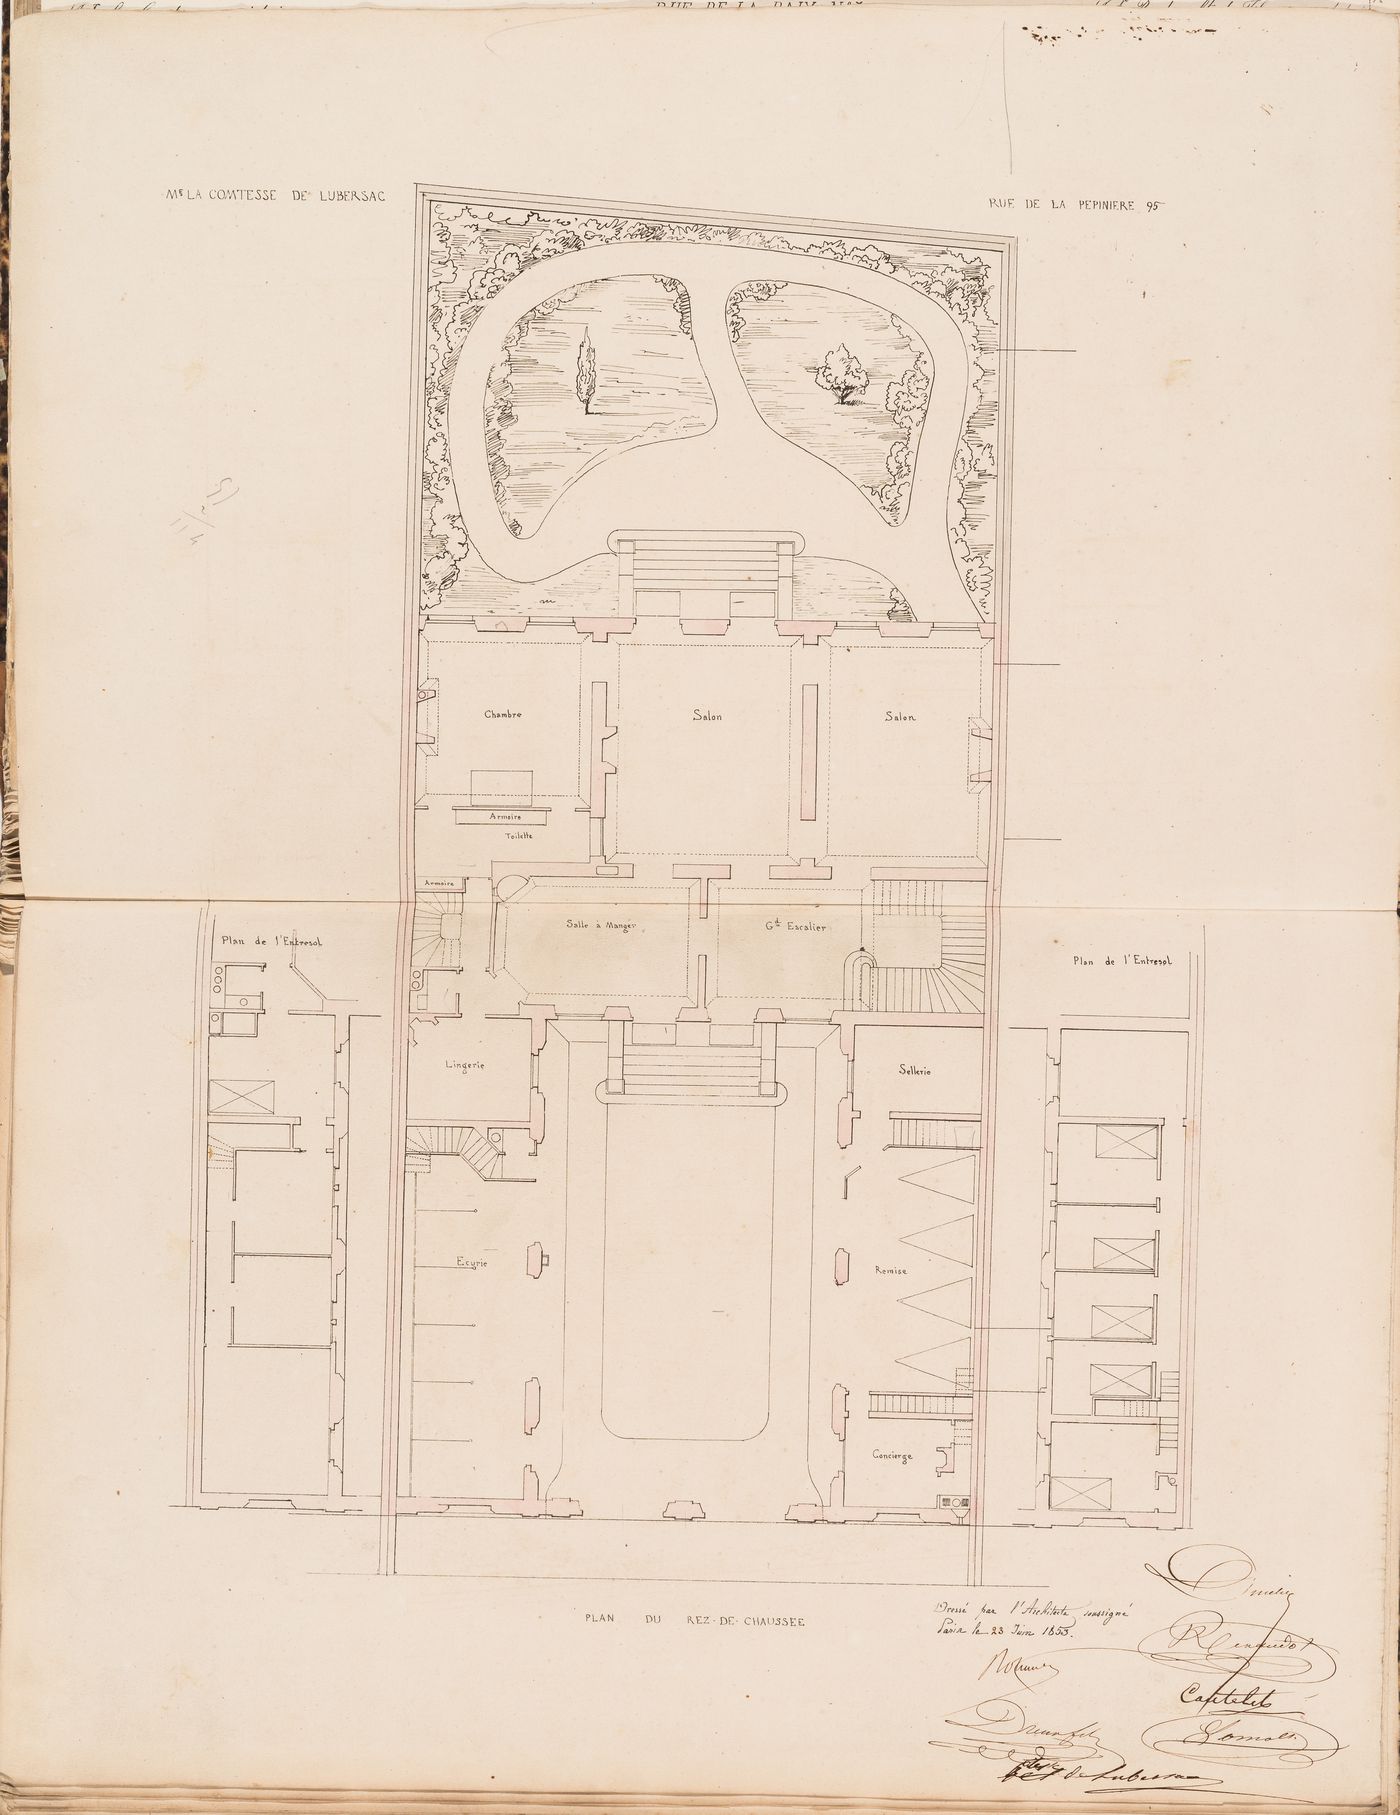 Contract drawing for a house for Madame la comtesse de Lubersac, 95 rue de la Pépinière, Paris: Ground floor plan, including the garden and partial plans for the "entresol"